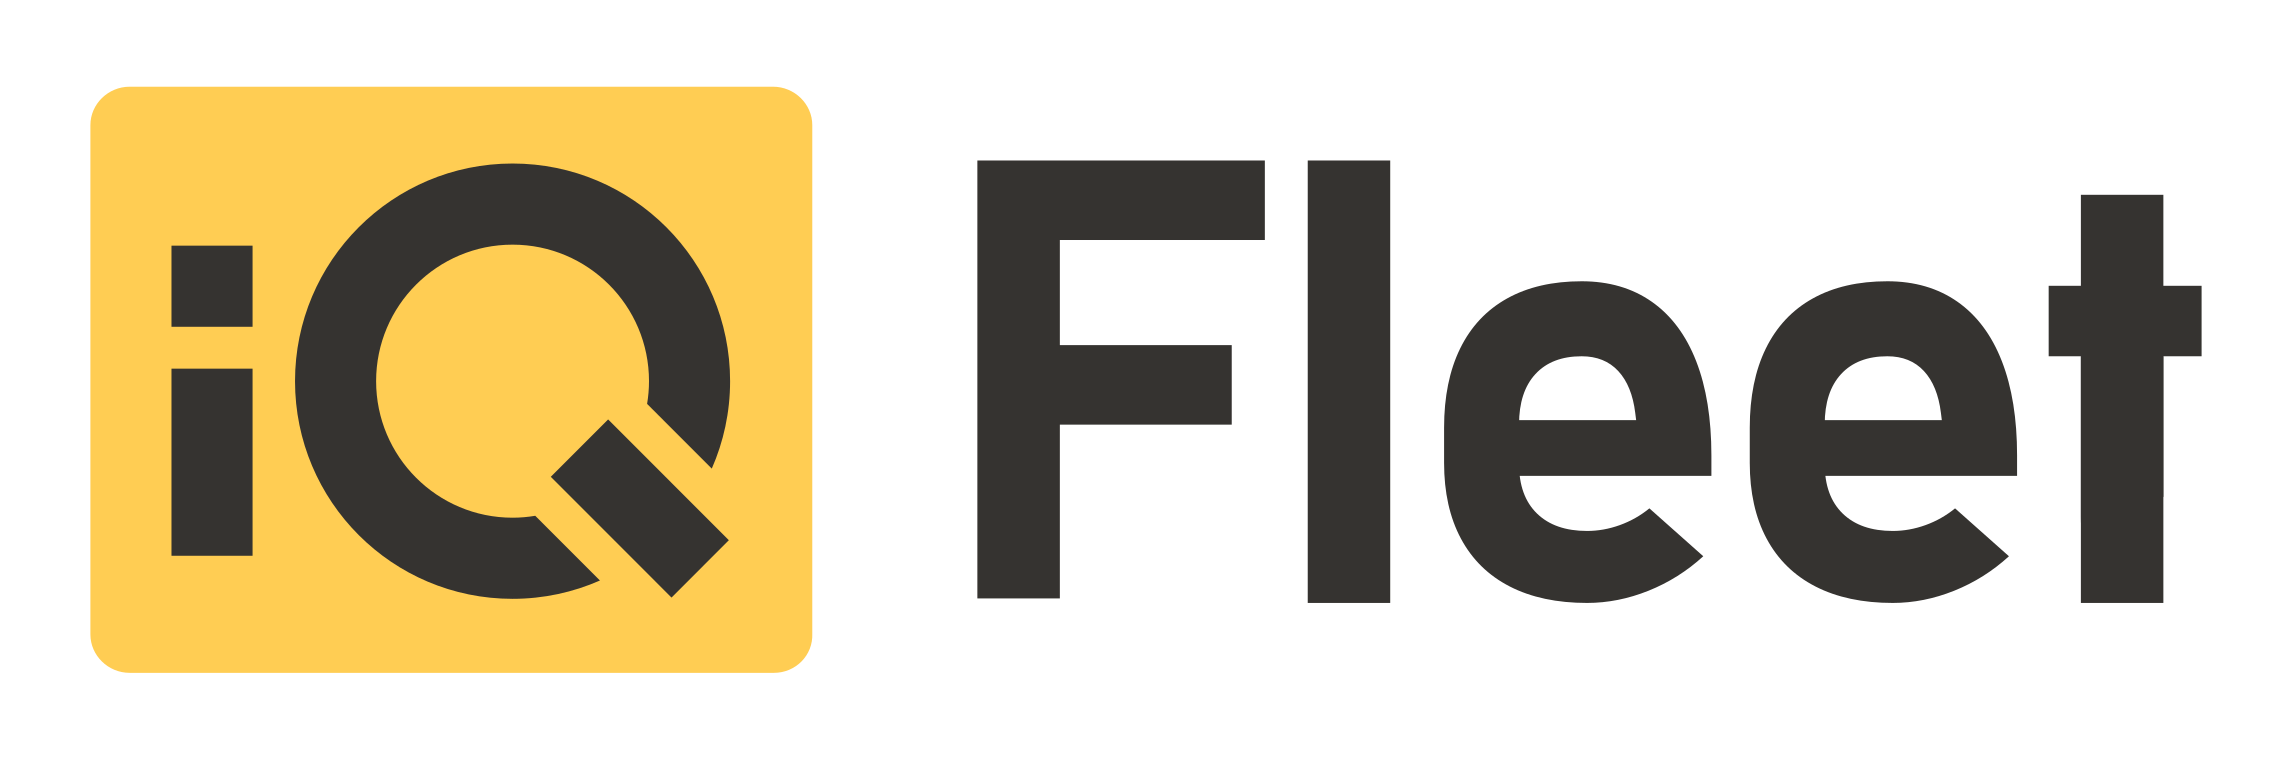 iqfleet-logo